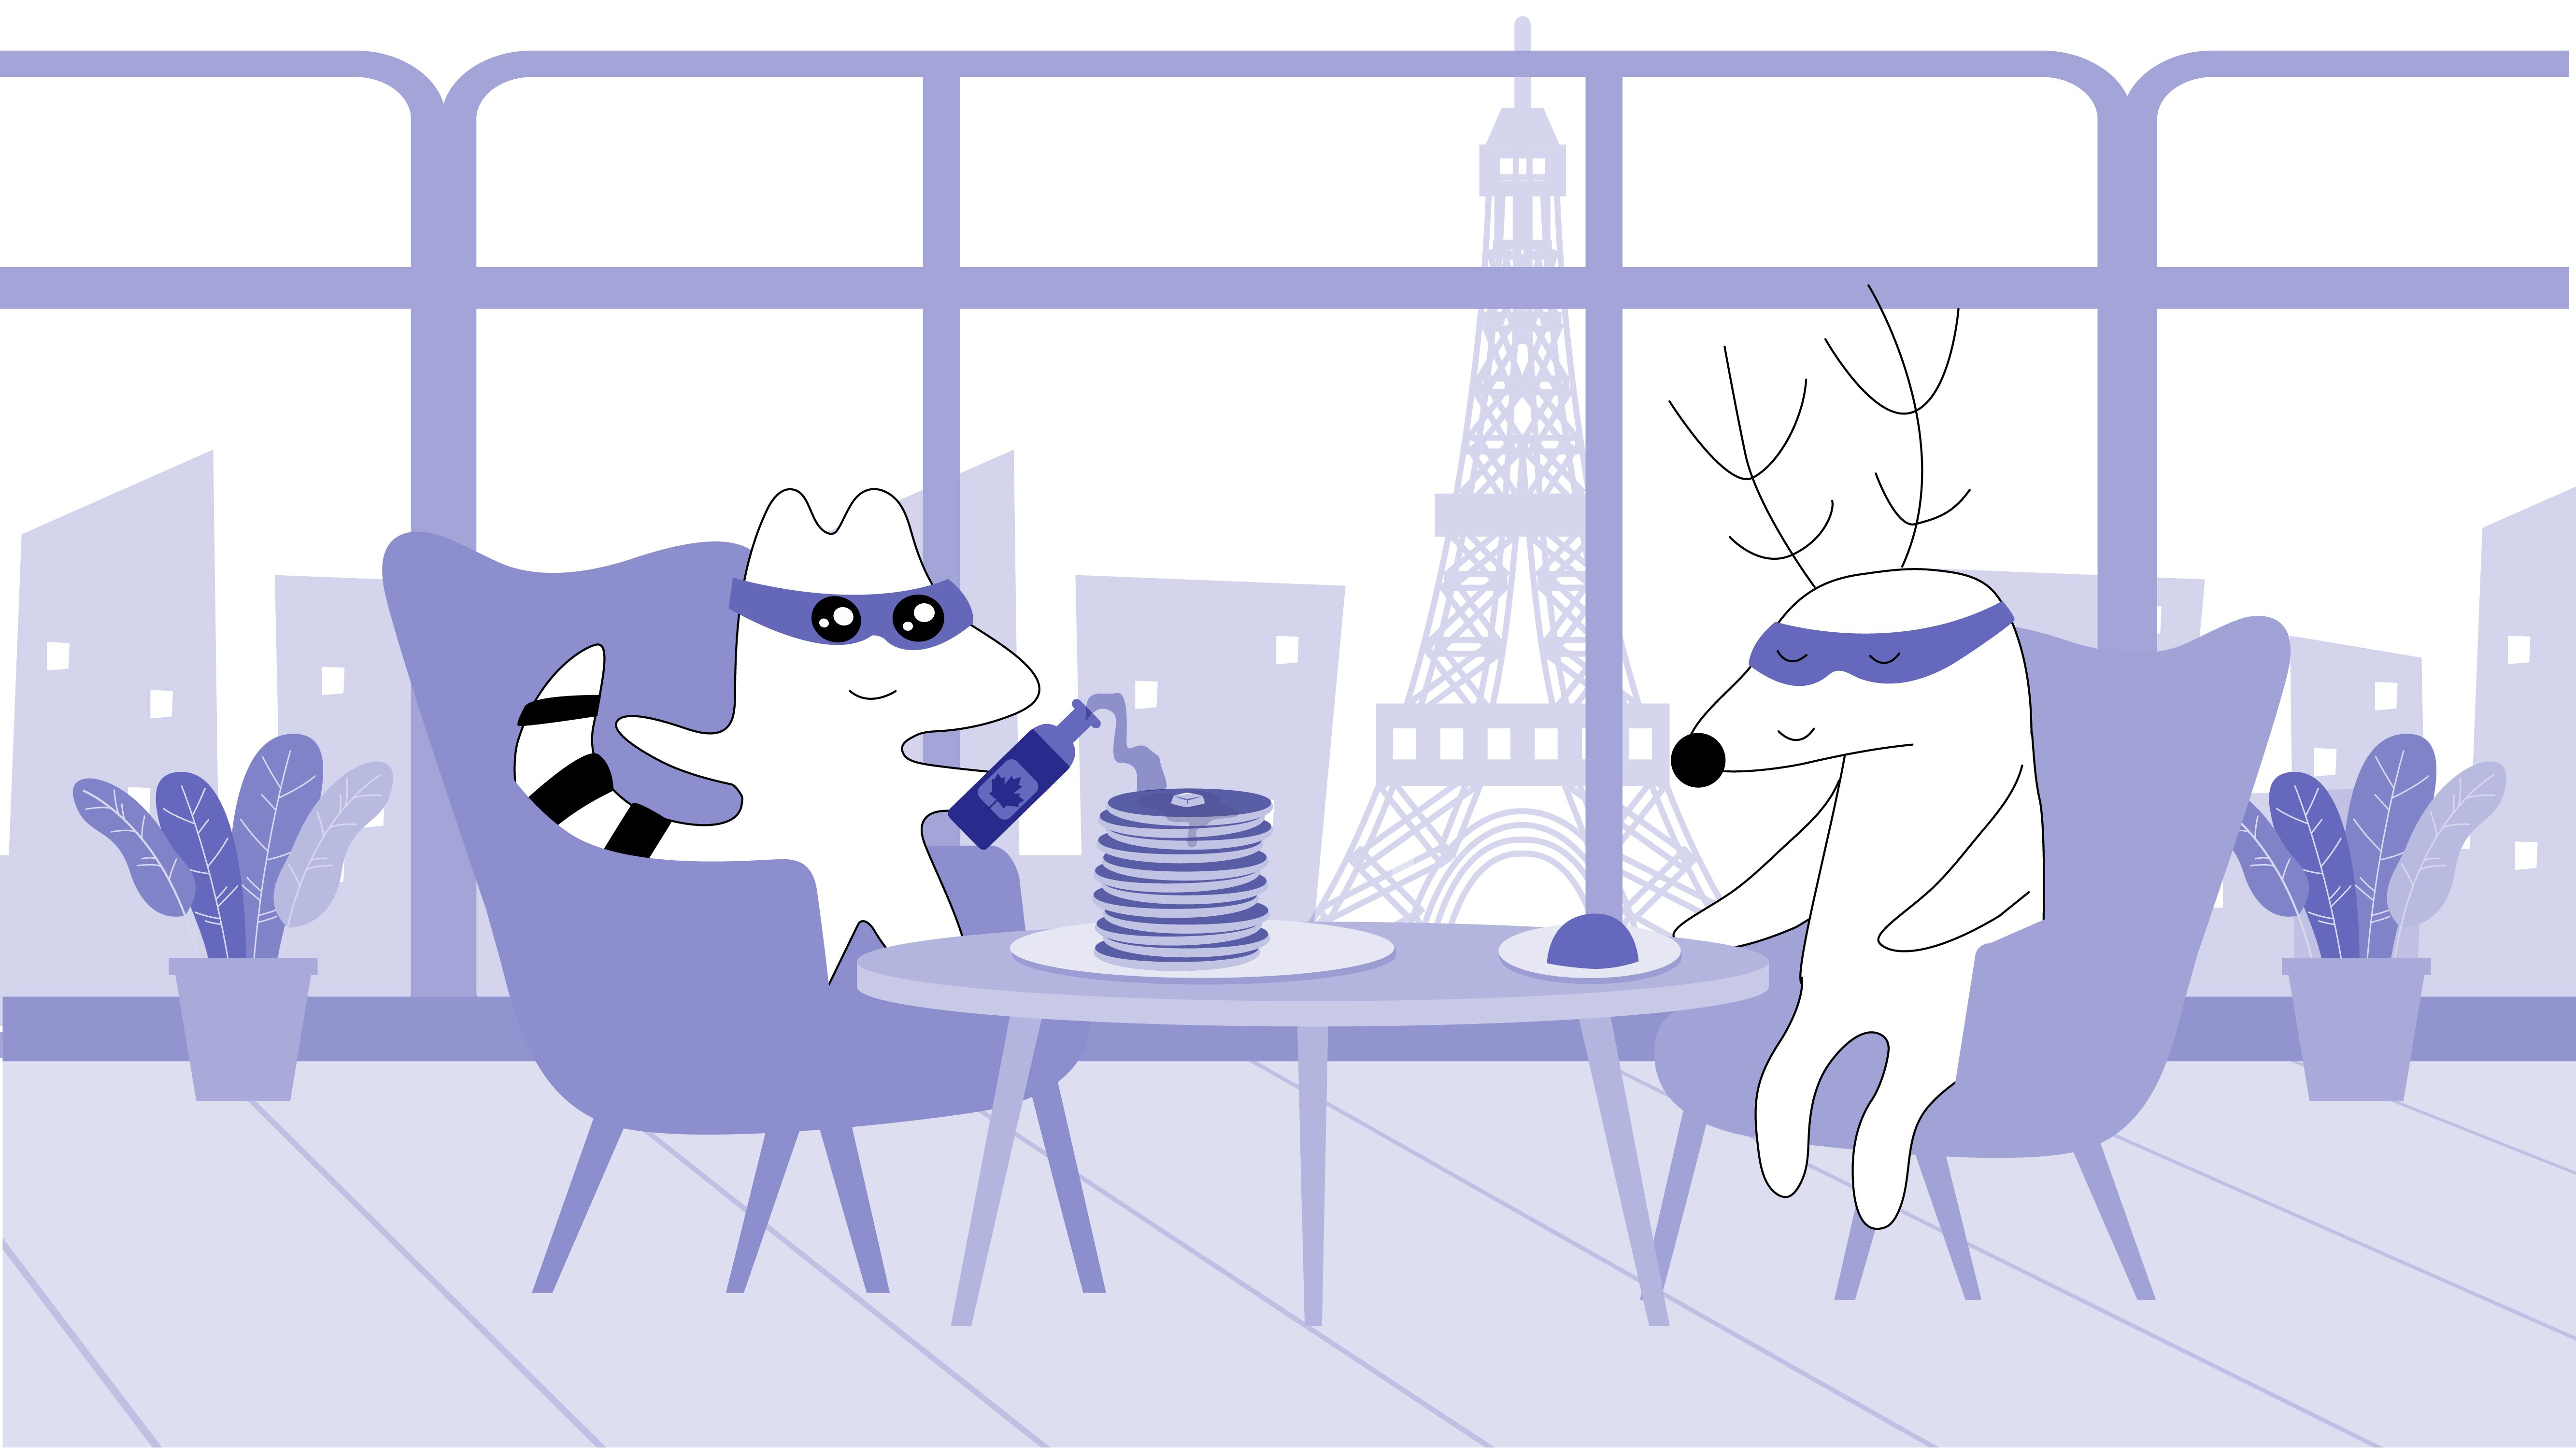 Soren and Iggy are at the Parisian cafe, Soren eats le flan, and Iggy eats la crêpe.